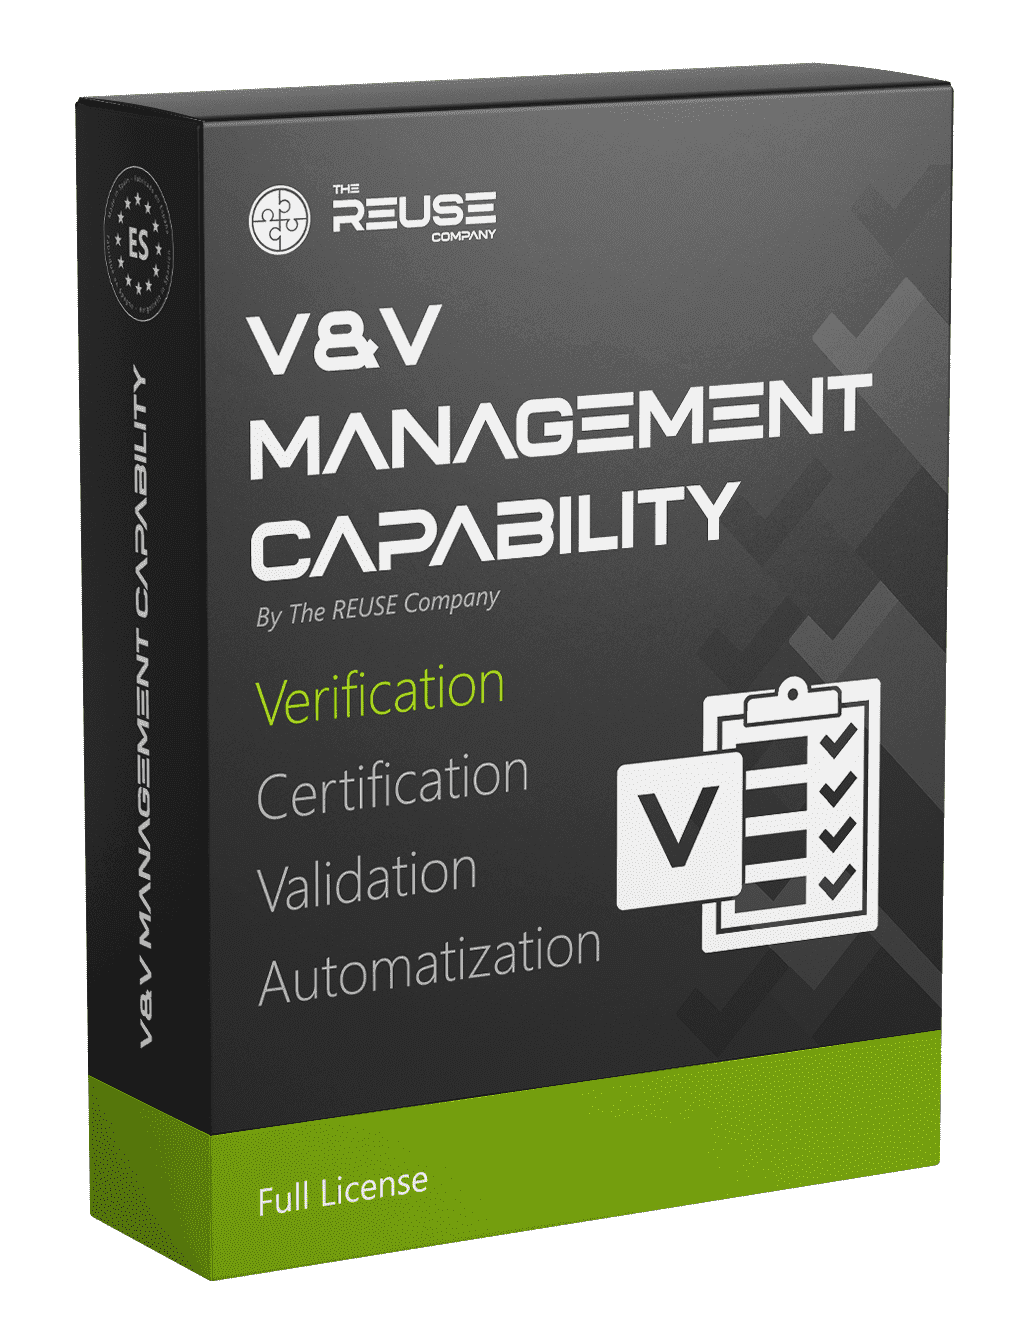 V&V - Verification and Validation Capability